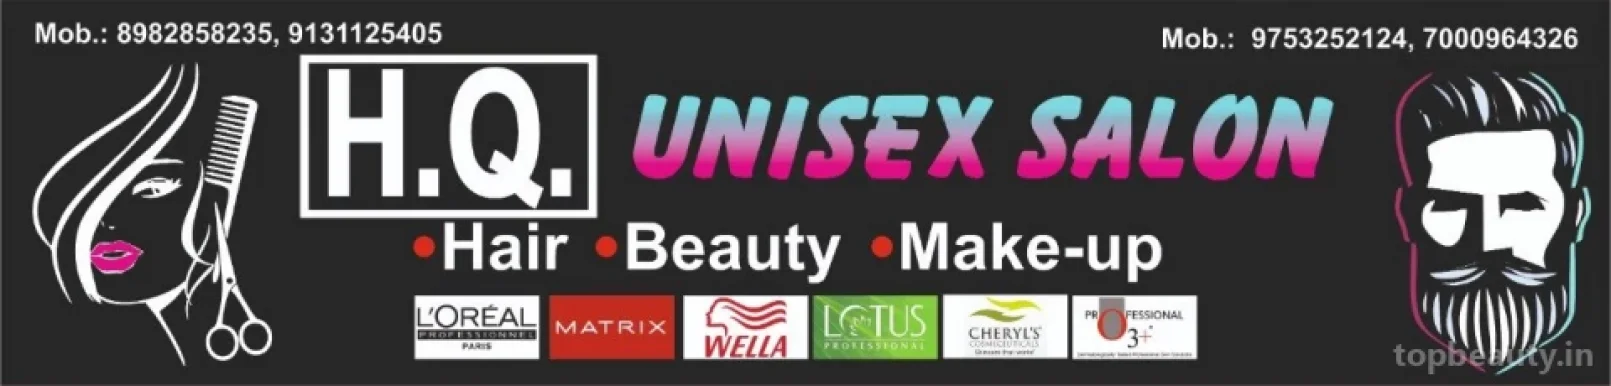 Hq Unisex salon, Raipur - Photo 4